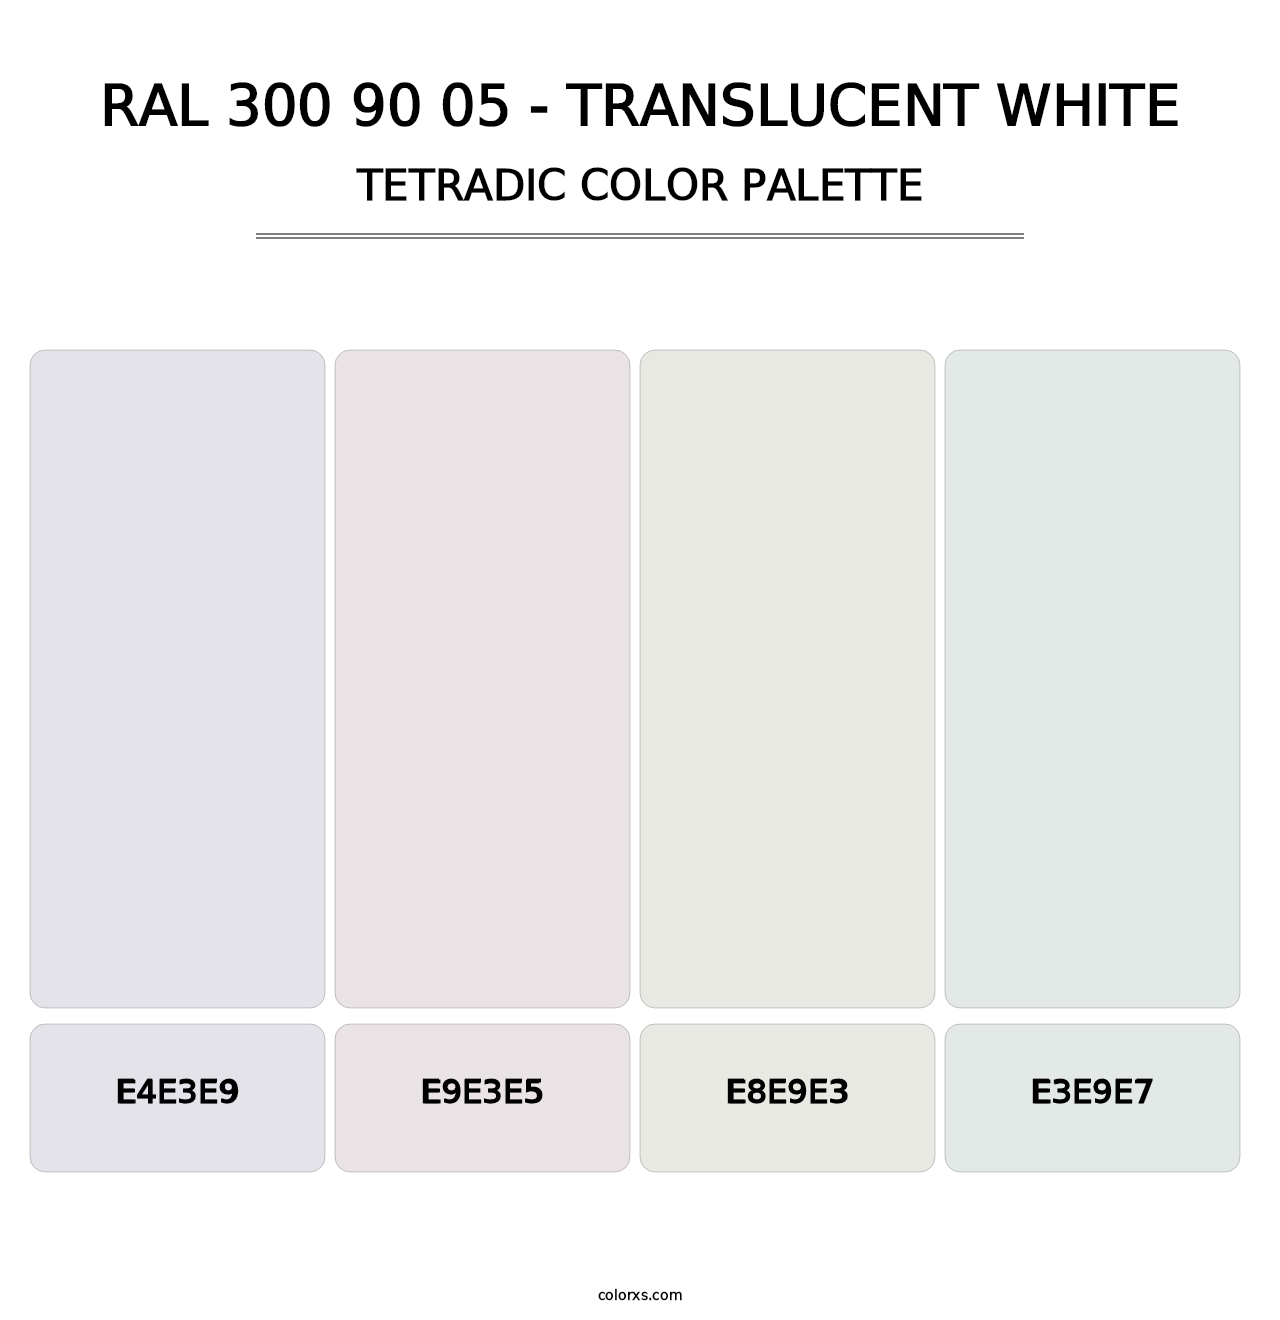 RAL 300 90 05 - Translucent White - Tetradic Color Palette